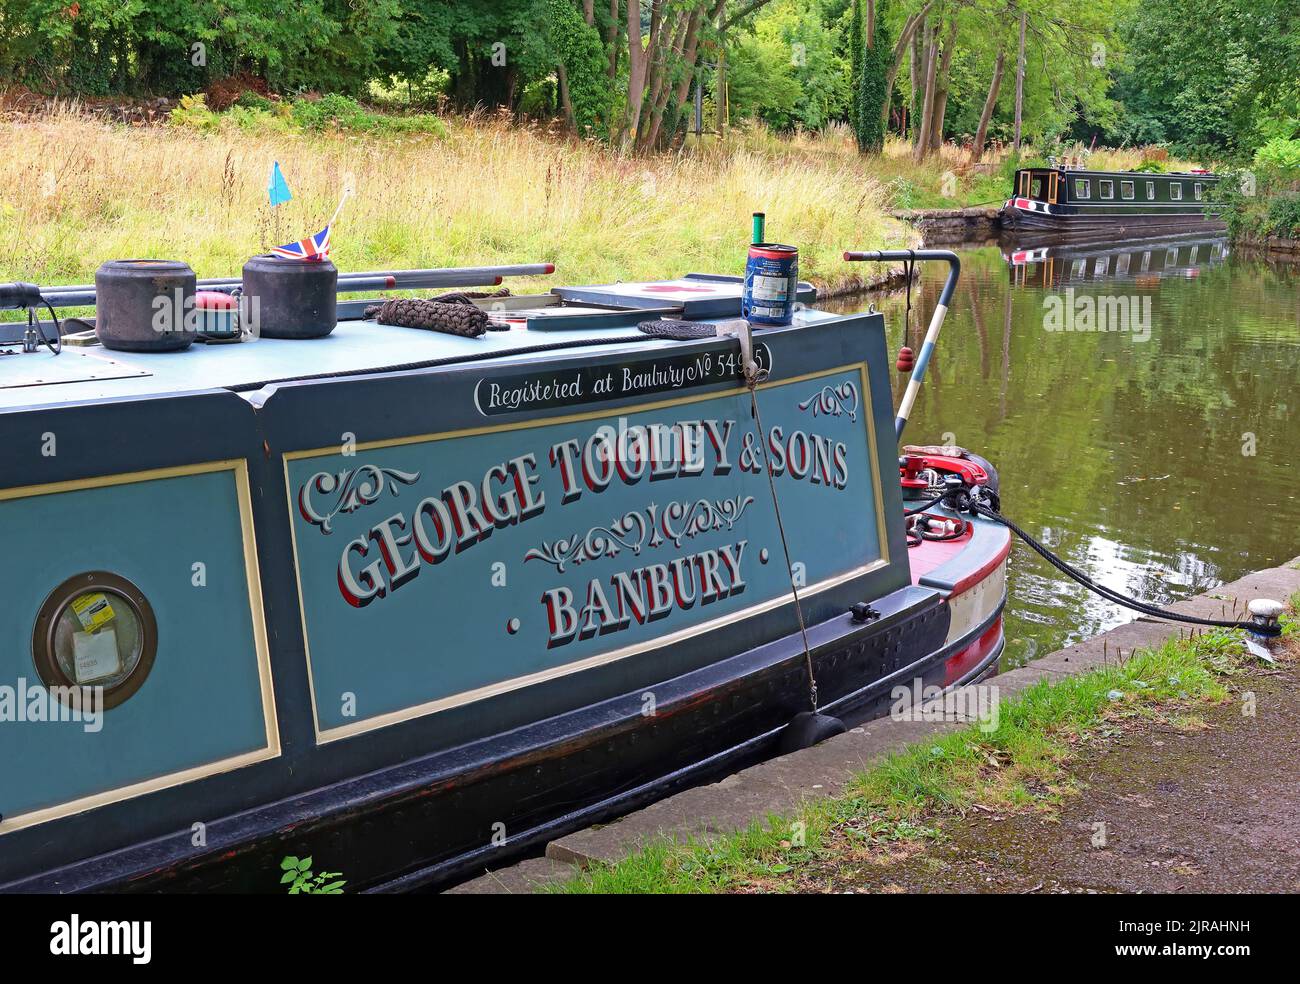 George Tooley & Sons, Banbury Barge liegt im Vale of Llangollen, Trevor, Llangollen, Wales, Vereinigtes Königreich, LL20 7TP Stockfoto